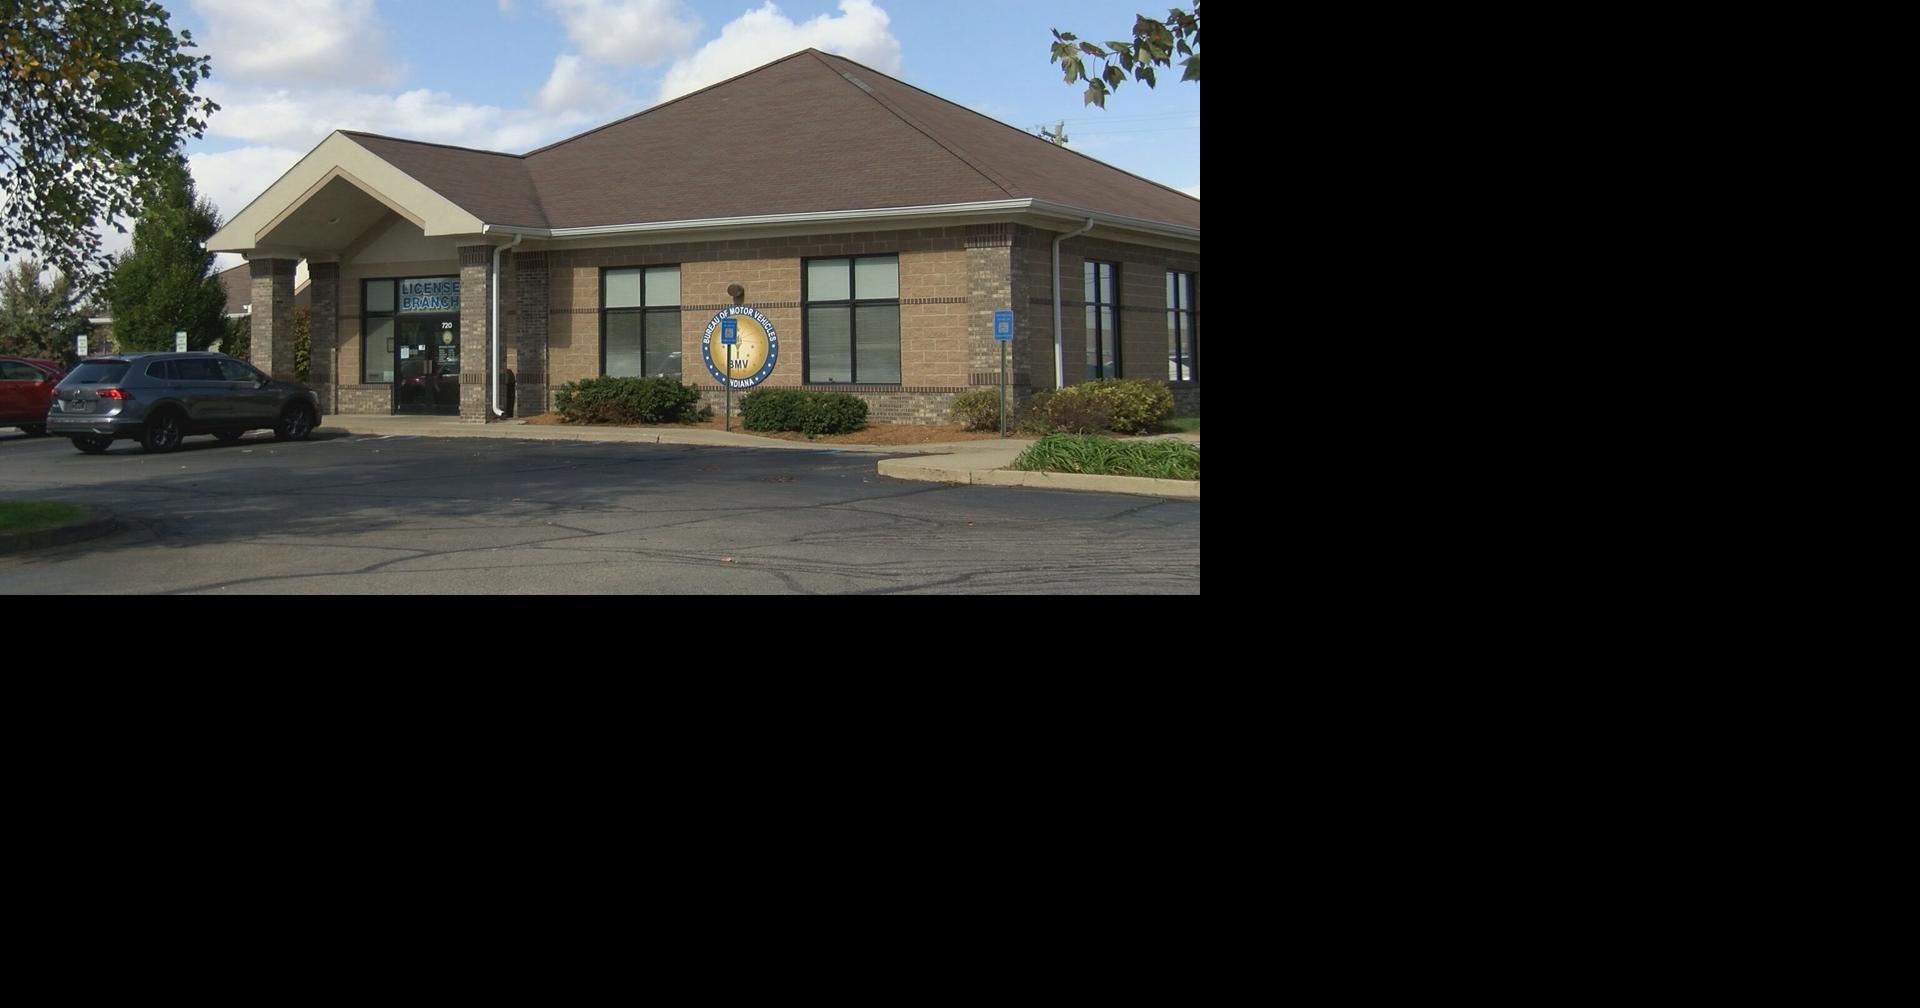 Indiana BMV considers closing West Lafayette branch | News | wlfi.com